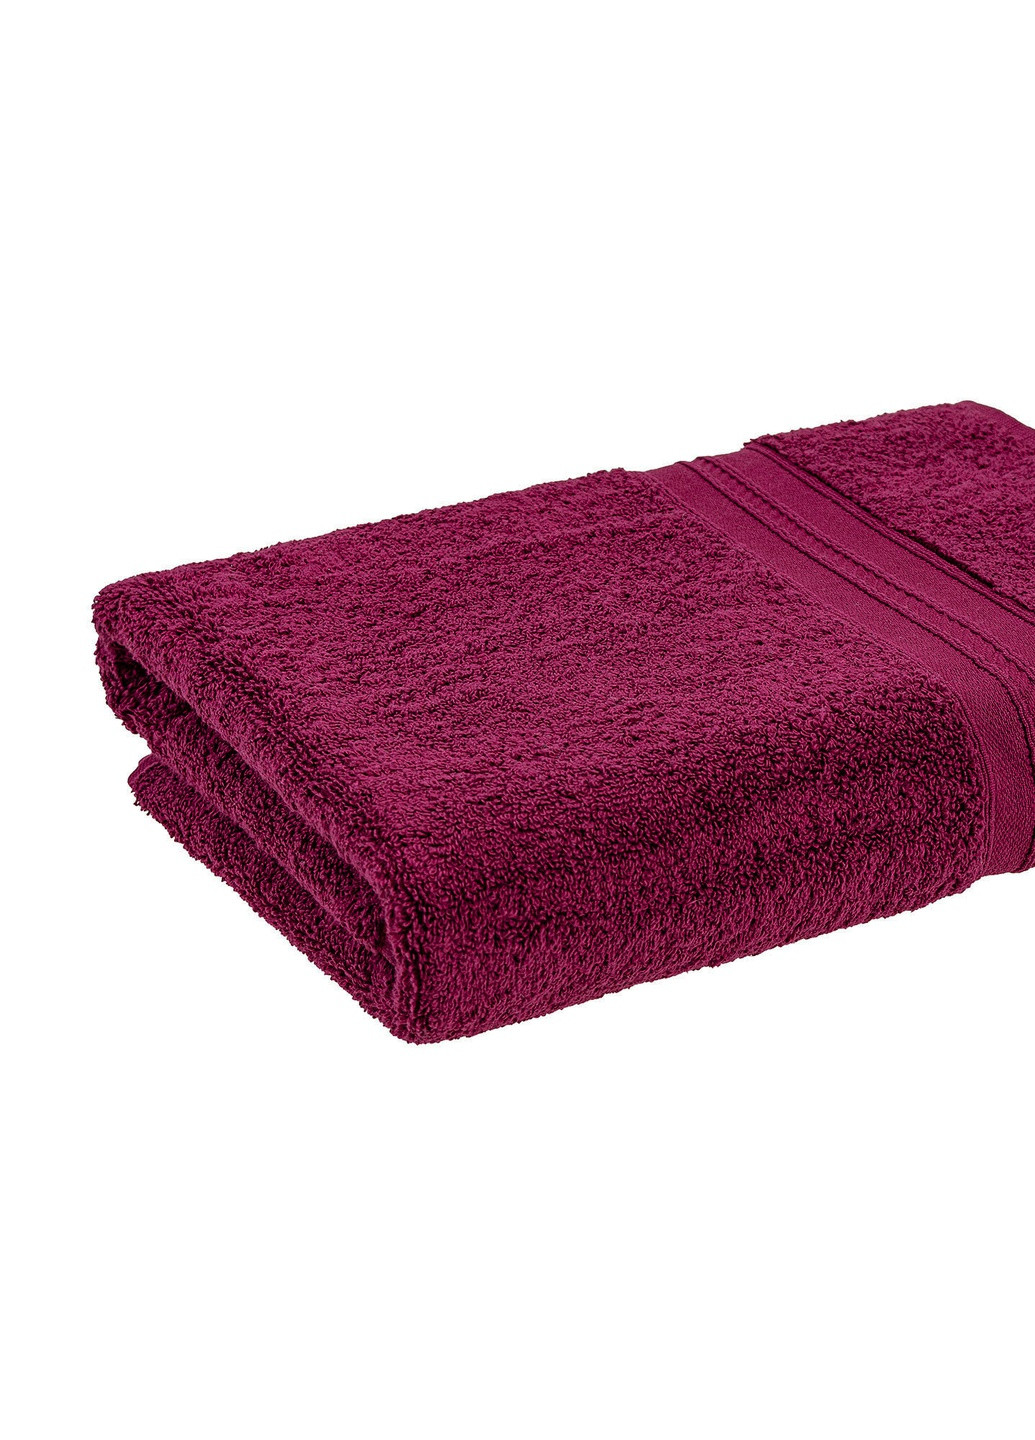 Home Line полотенце махровое 70х140 бордовый производство - Турция